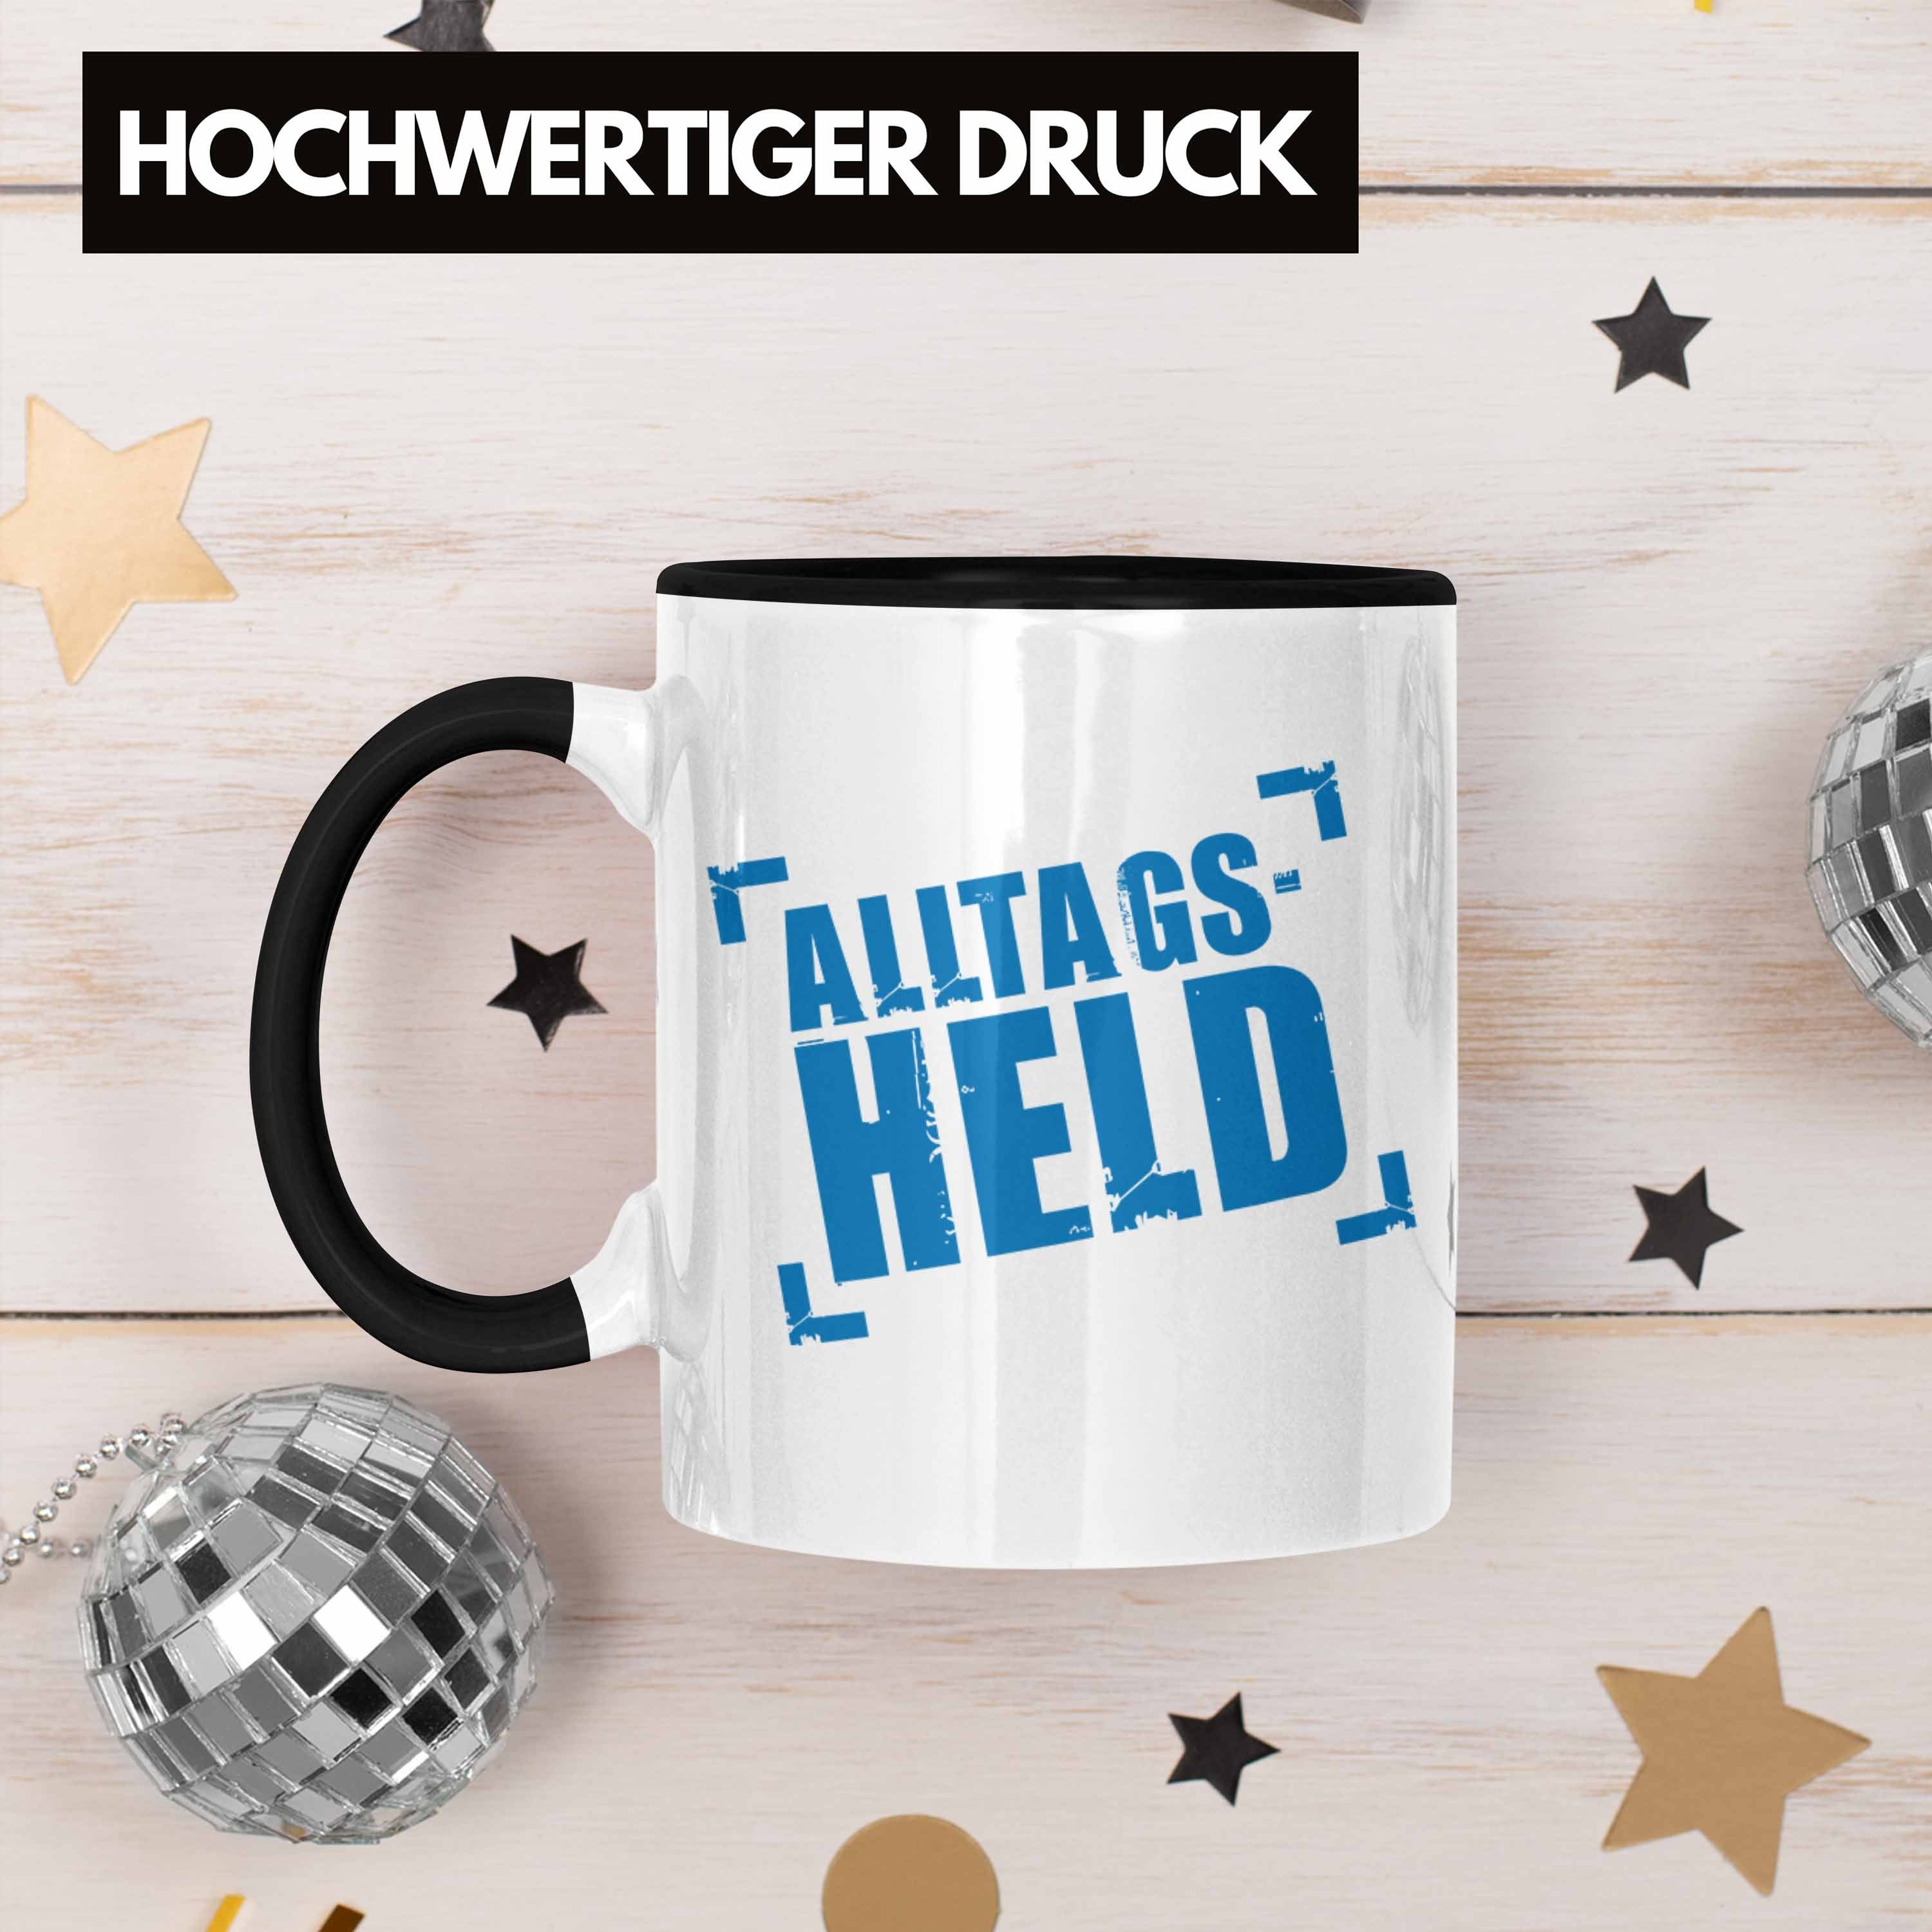 Trendation Mann Schwarz Lustig Männer Lustige Alltags-Held Tasse Kollegin Trendation - Kaffeebecher Kollege Büro Tasse Kaffeetasse